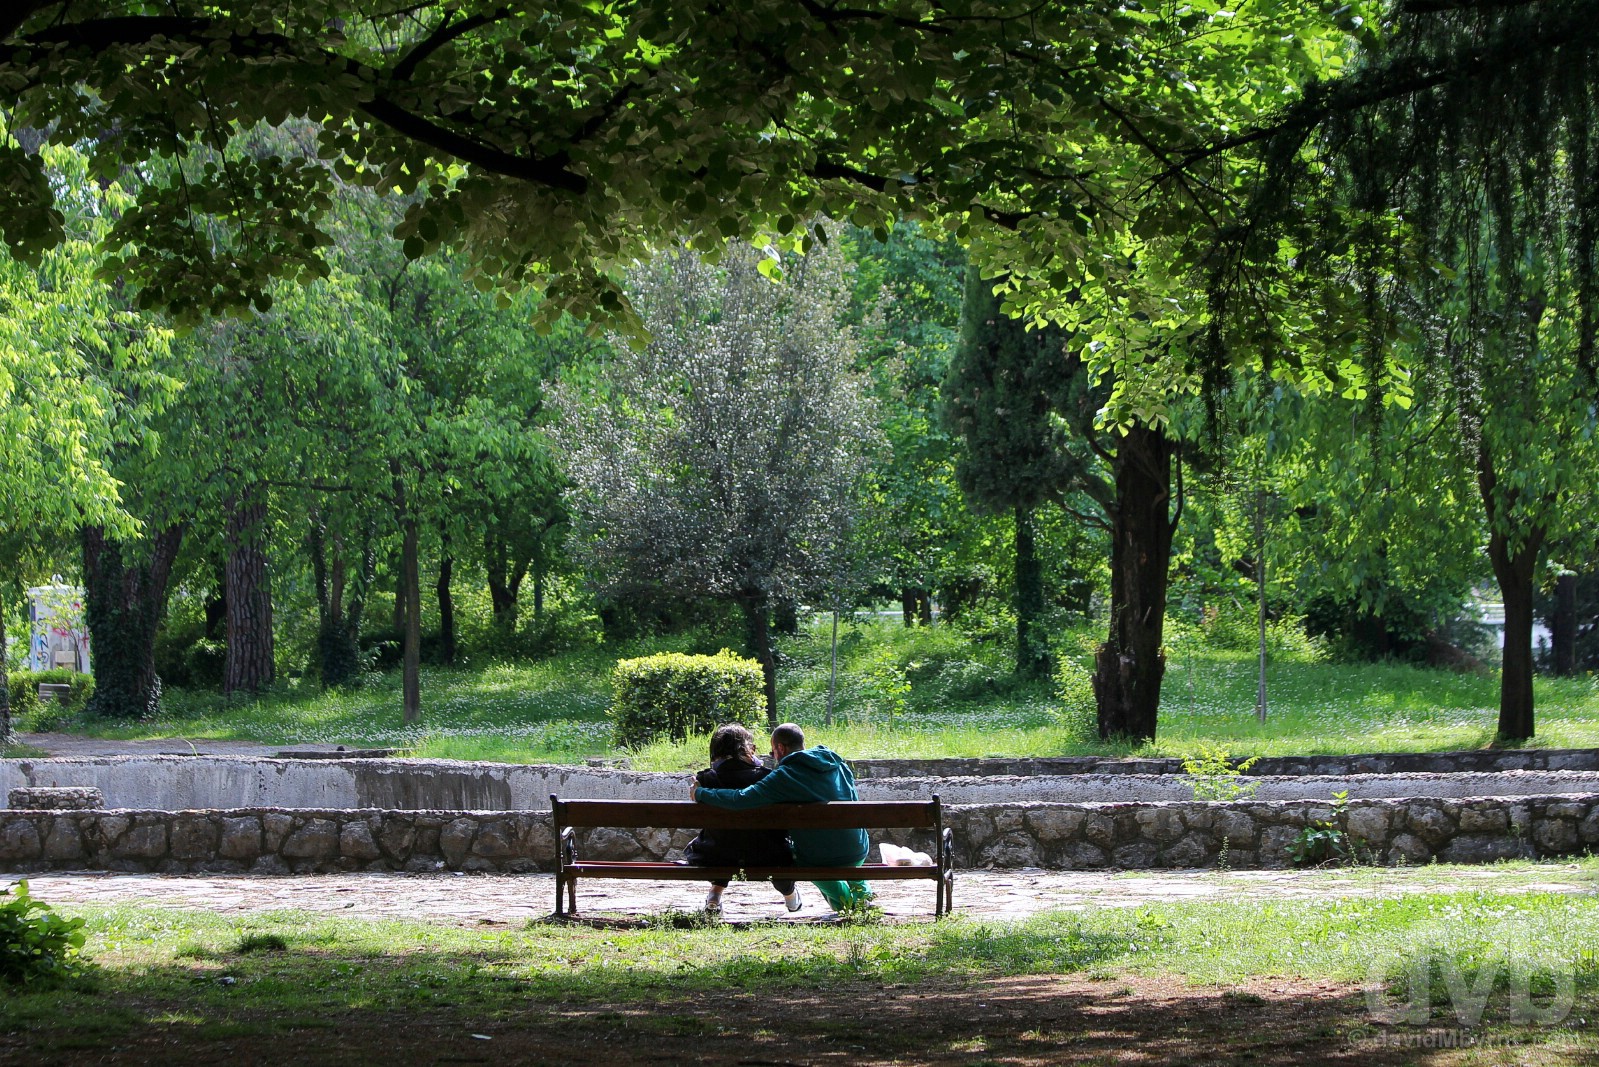 Njegosev Park, Podgorica, Montenegro. April 21, 2017.